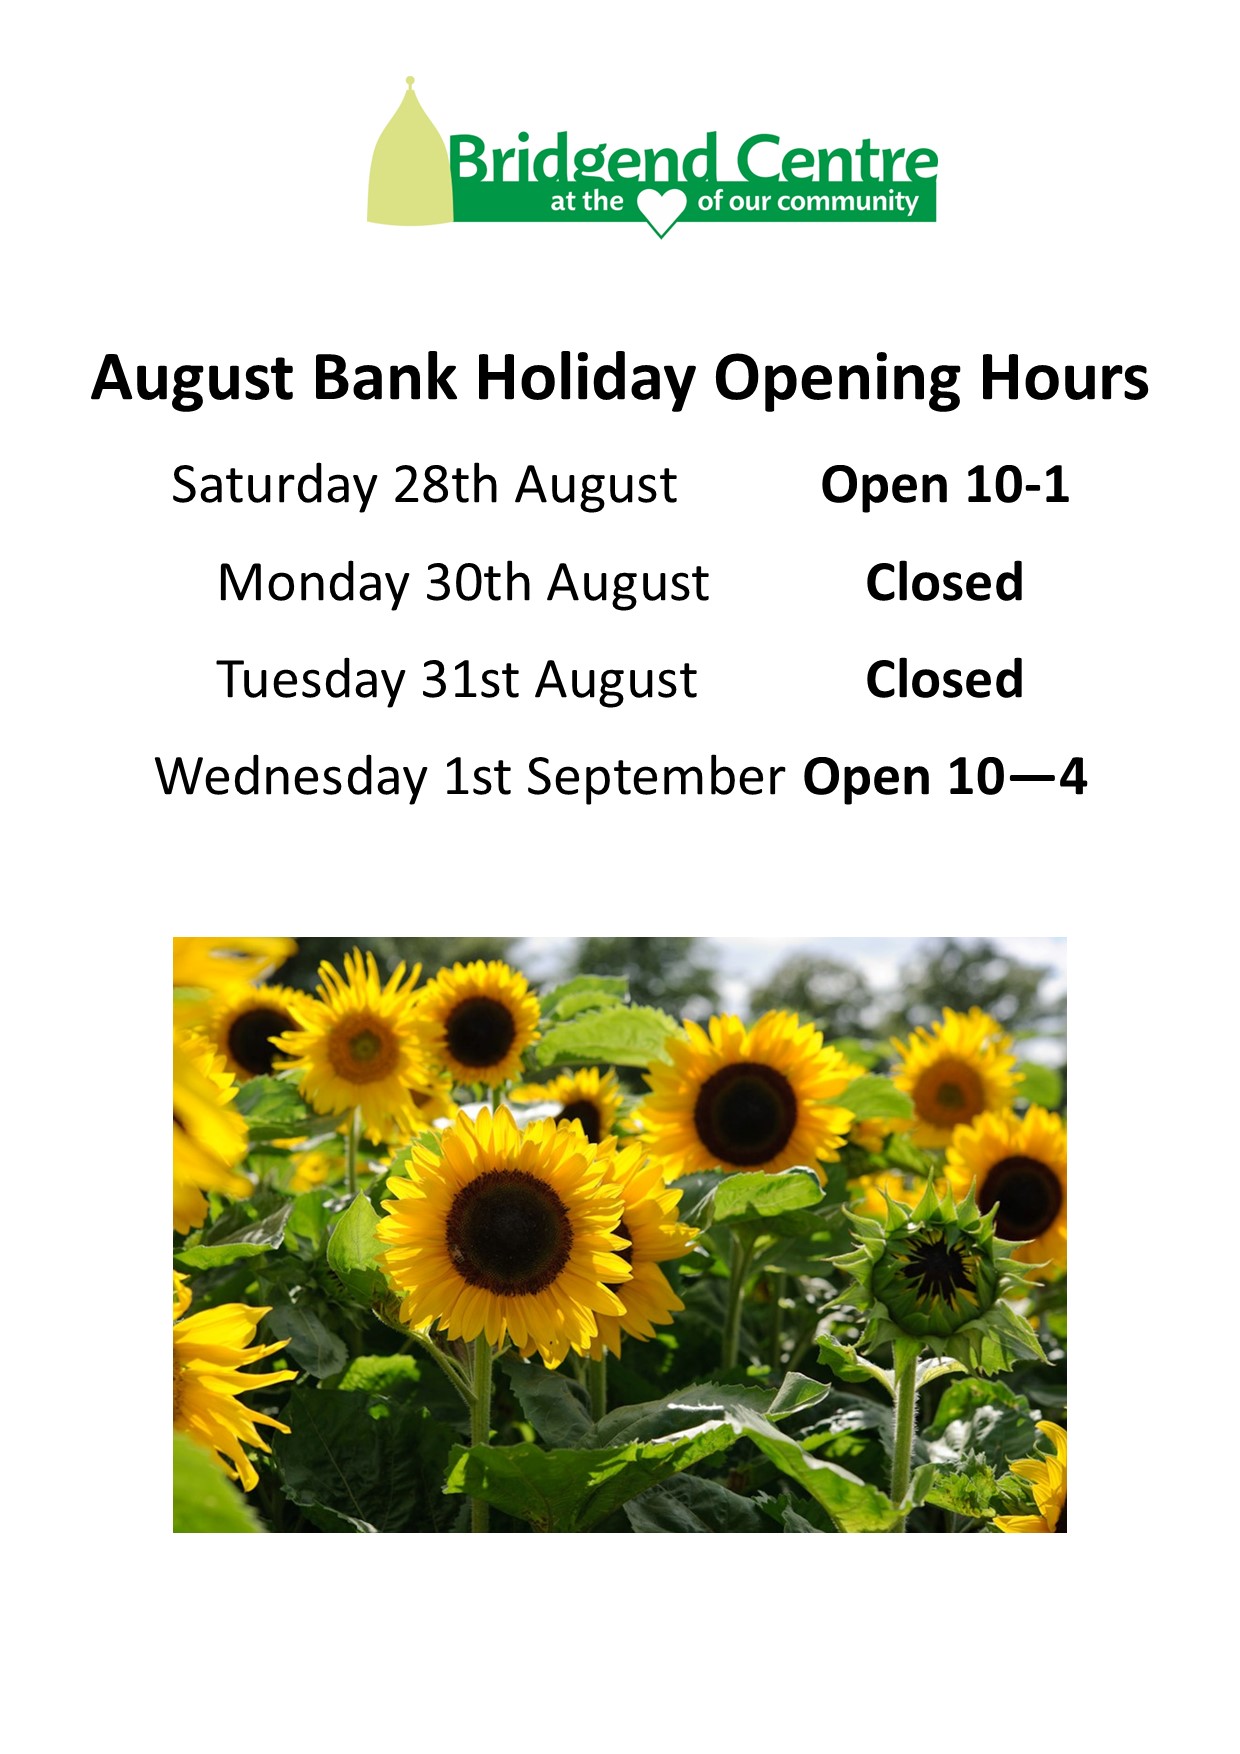 Bank holiday weekend August Bridgend Centre